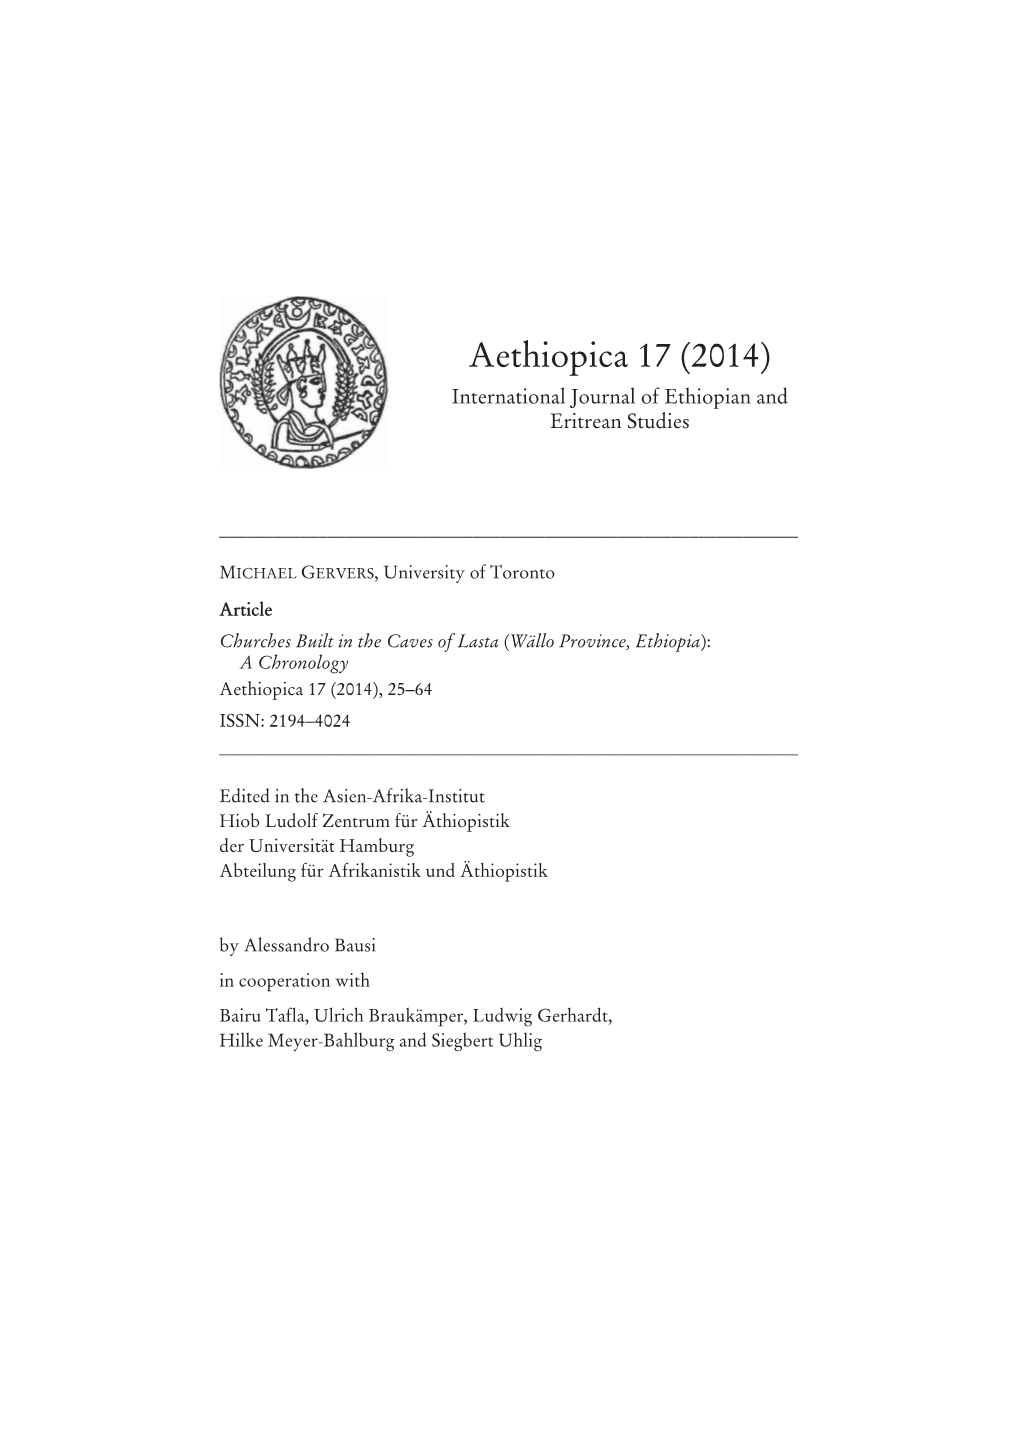 Aethiopica 17 (2014) International Journal of Ethiopian and Eritrean Studies